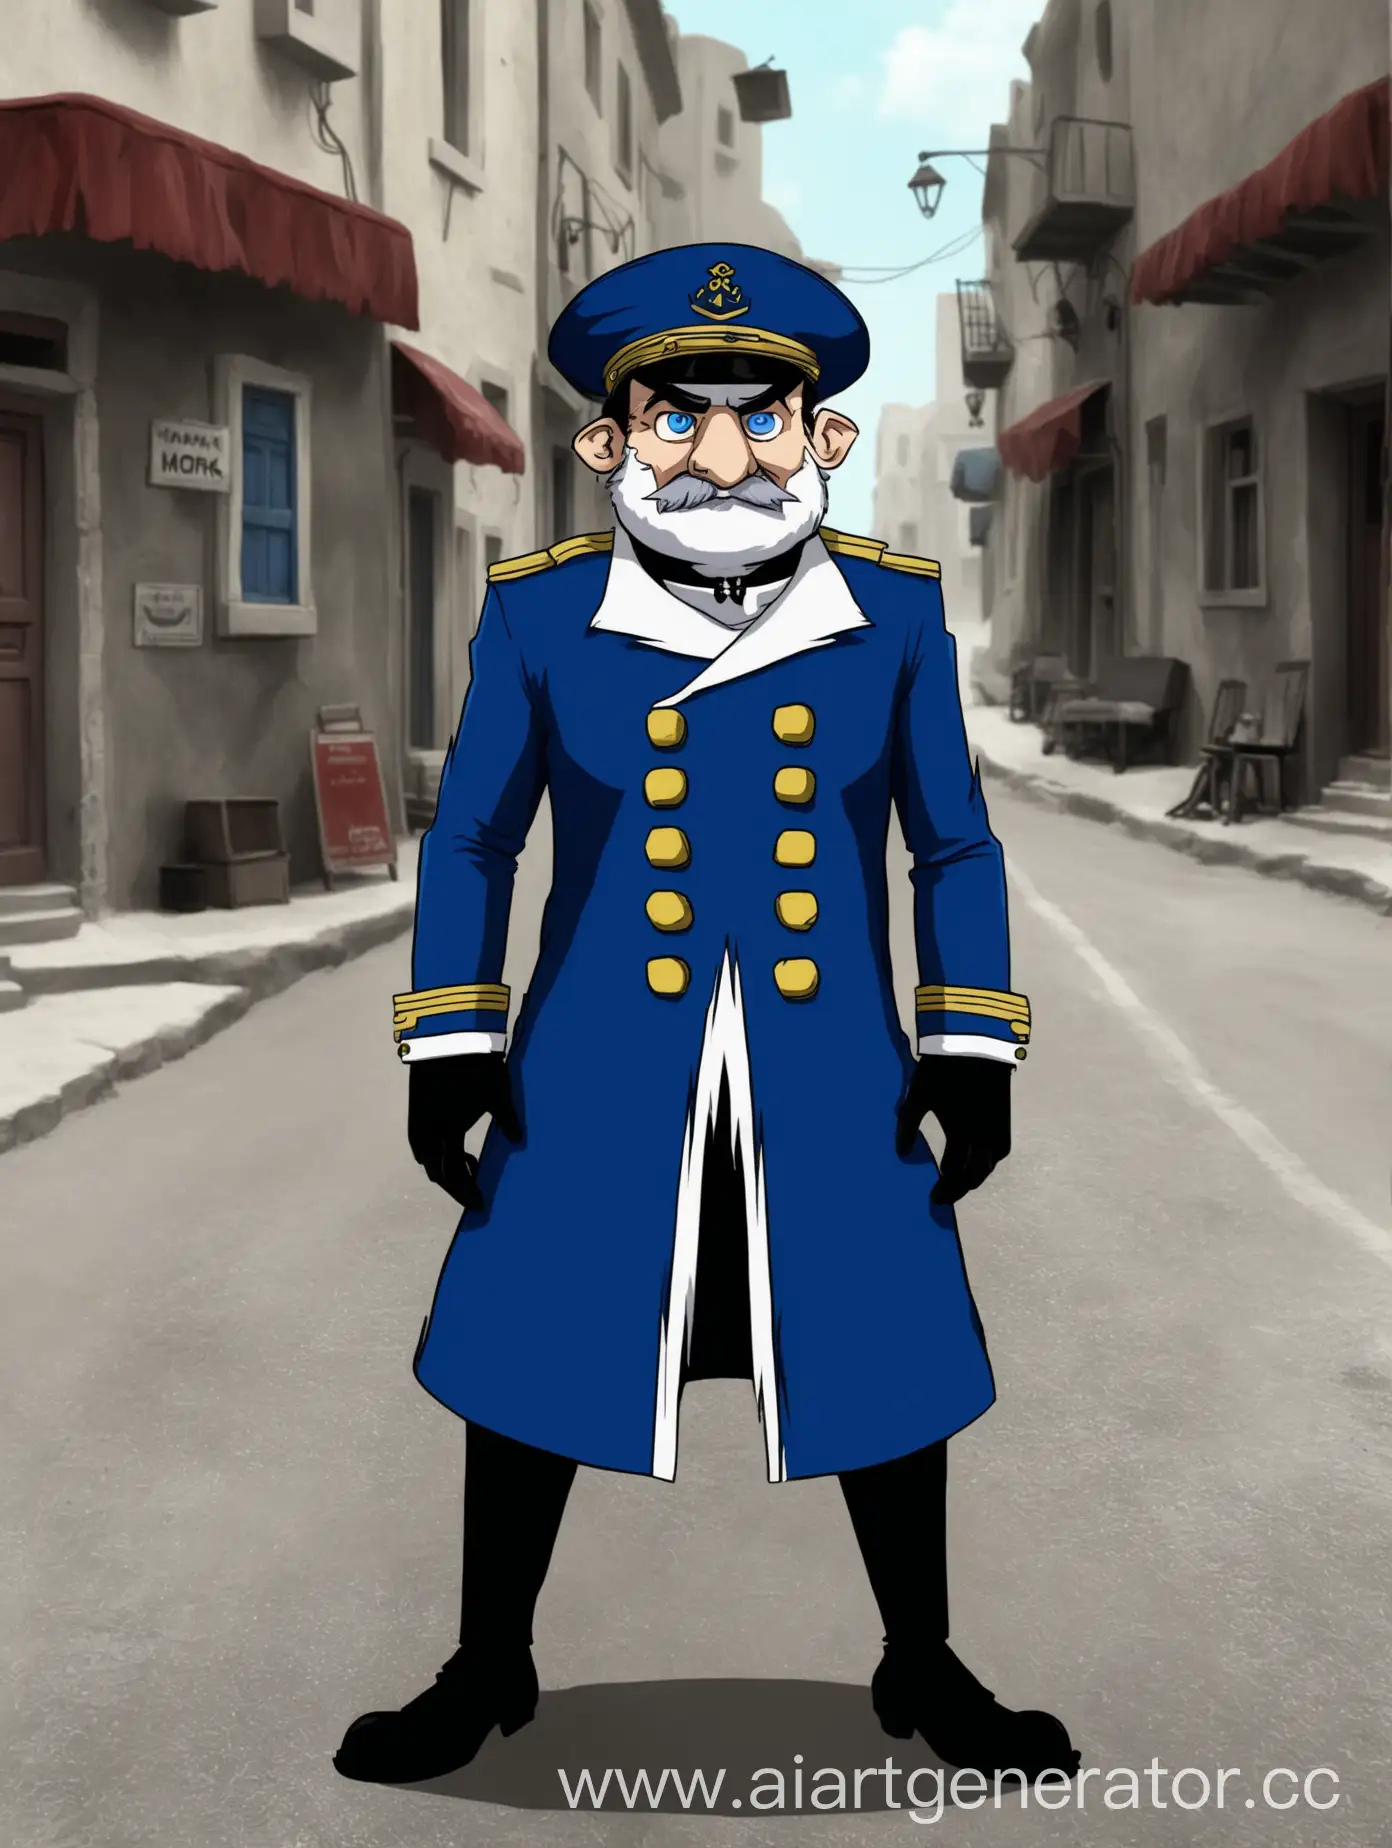 Captain-Morcou-Patrols-the-Vibrant-Streets-of-AnkMork-Porca